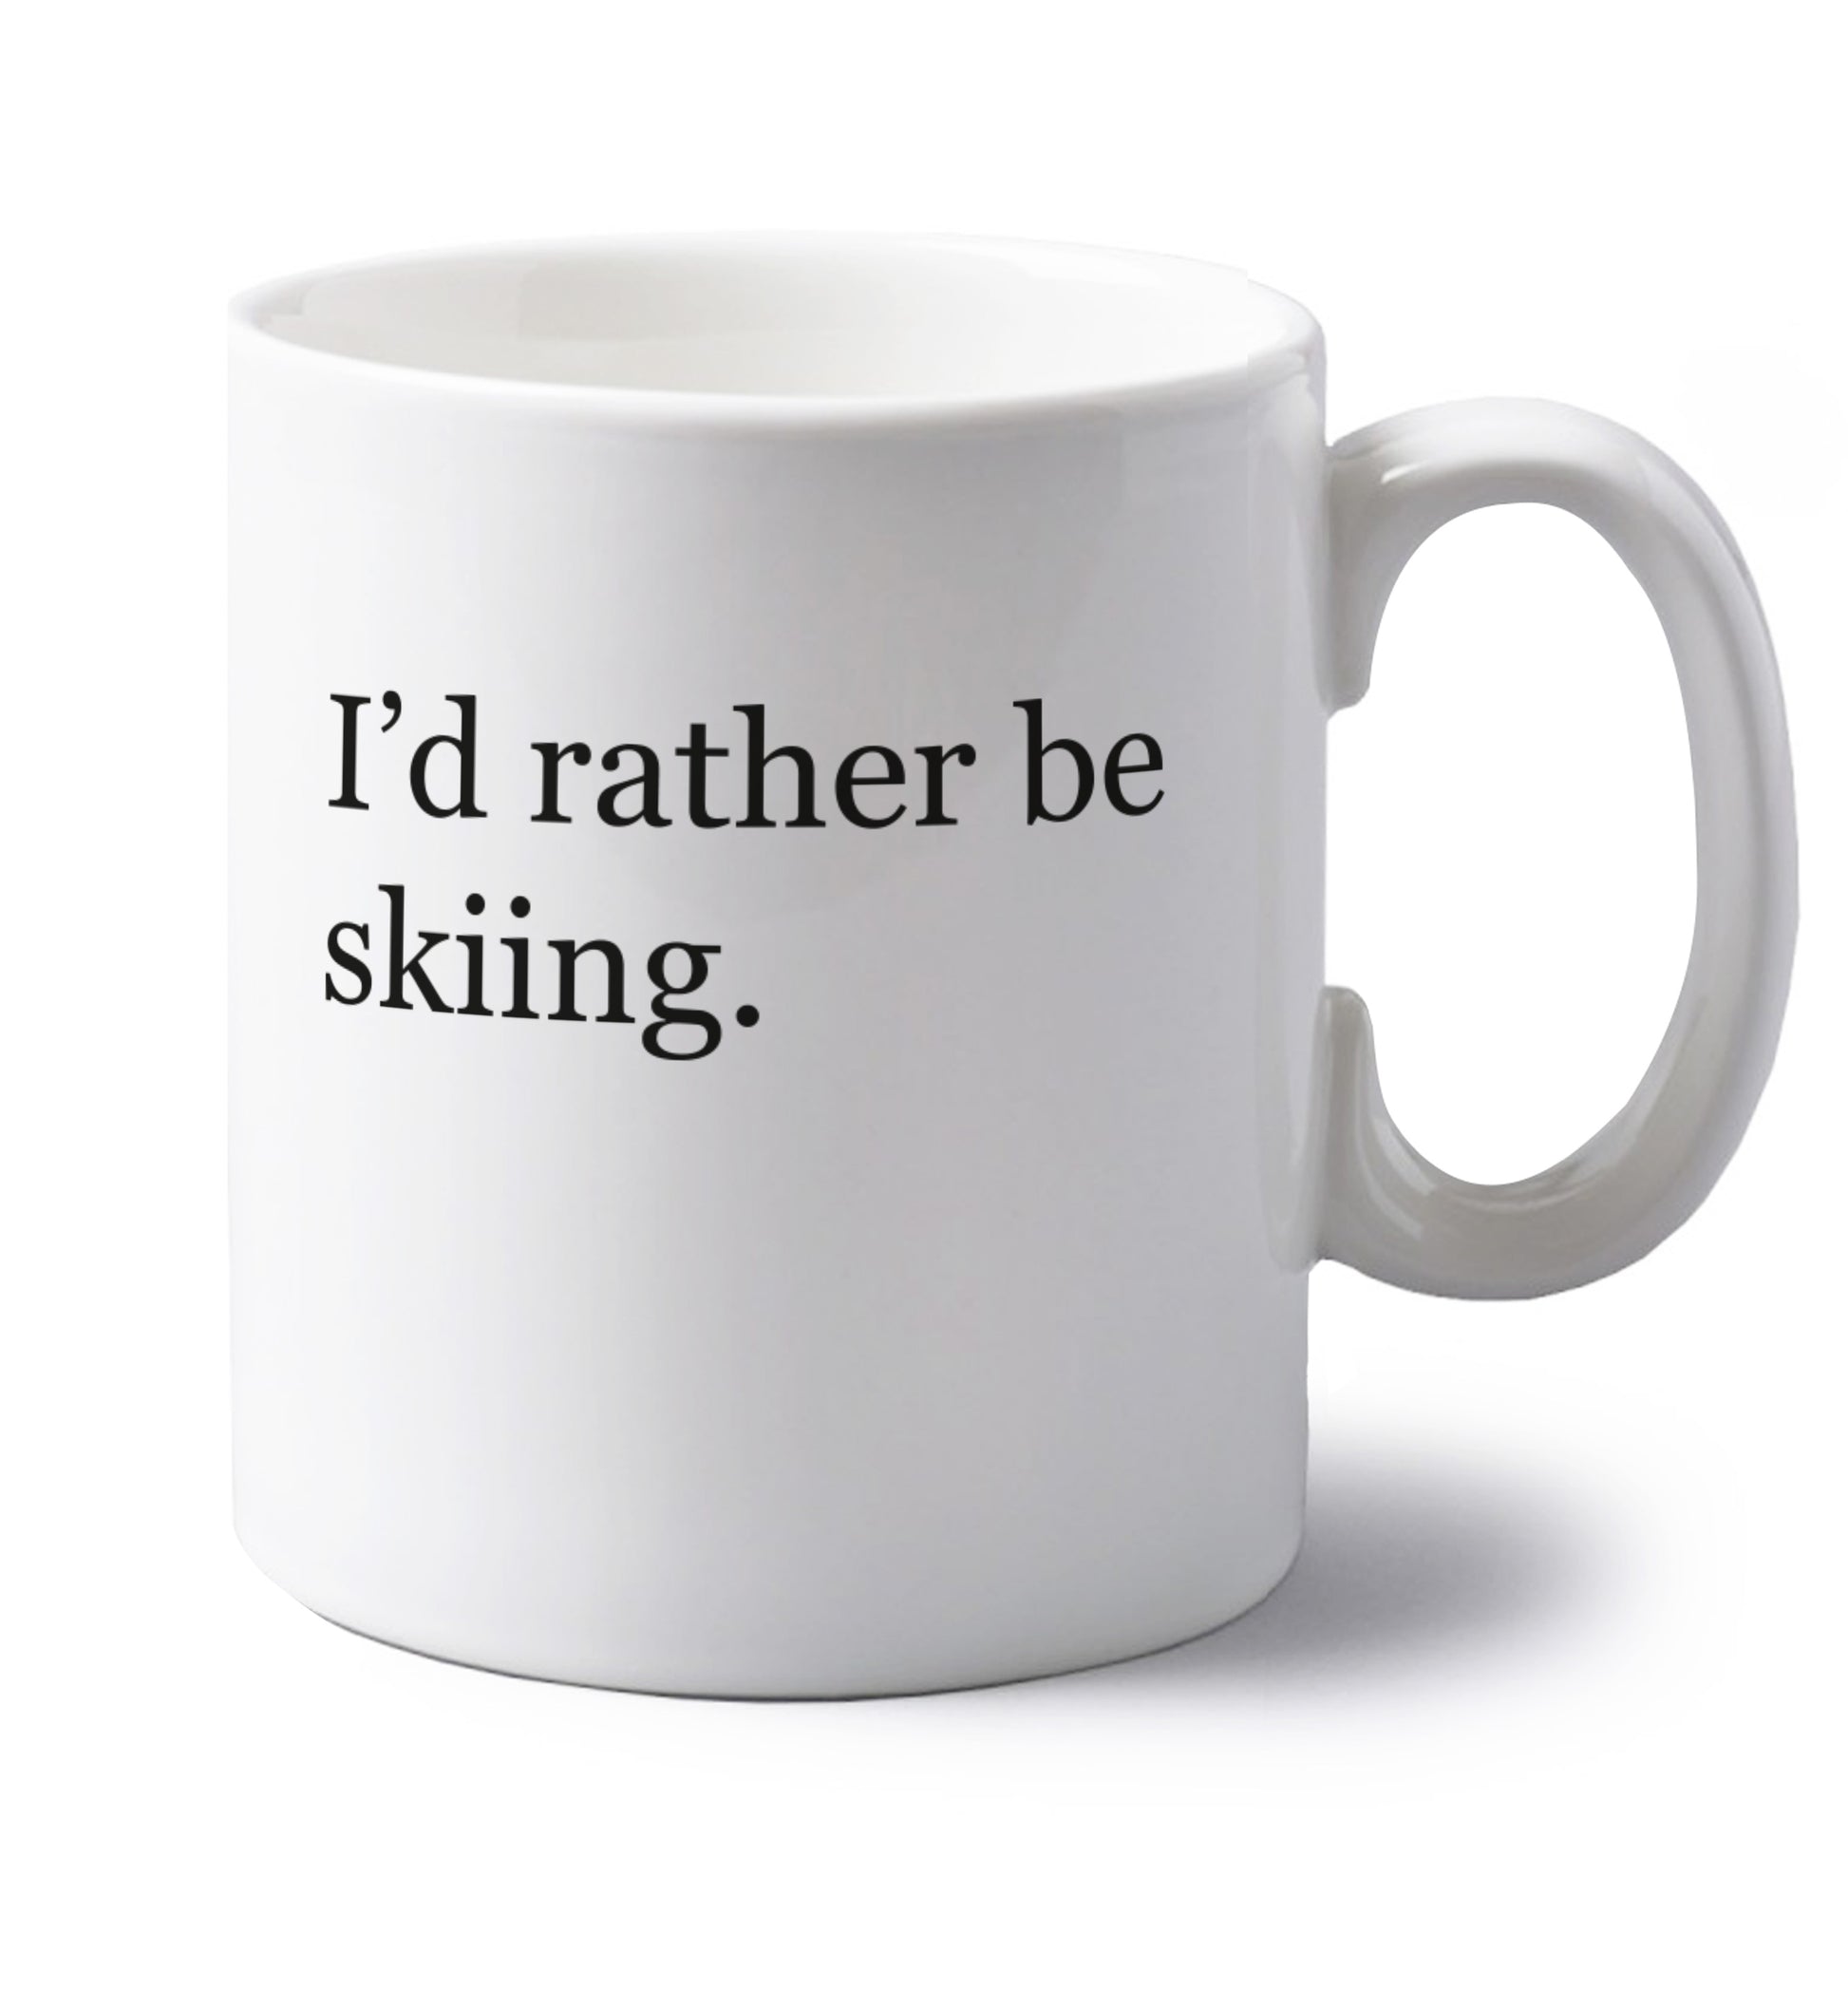 Skiing mode activated left handed white ceramic mug 